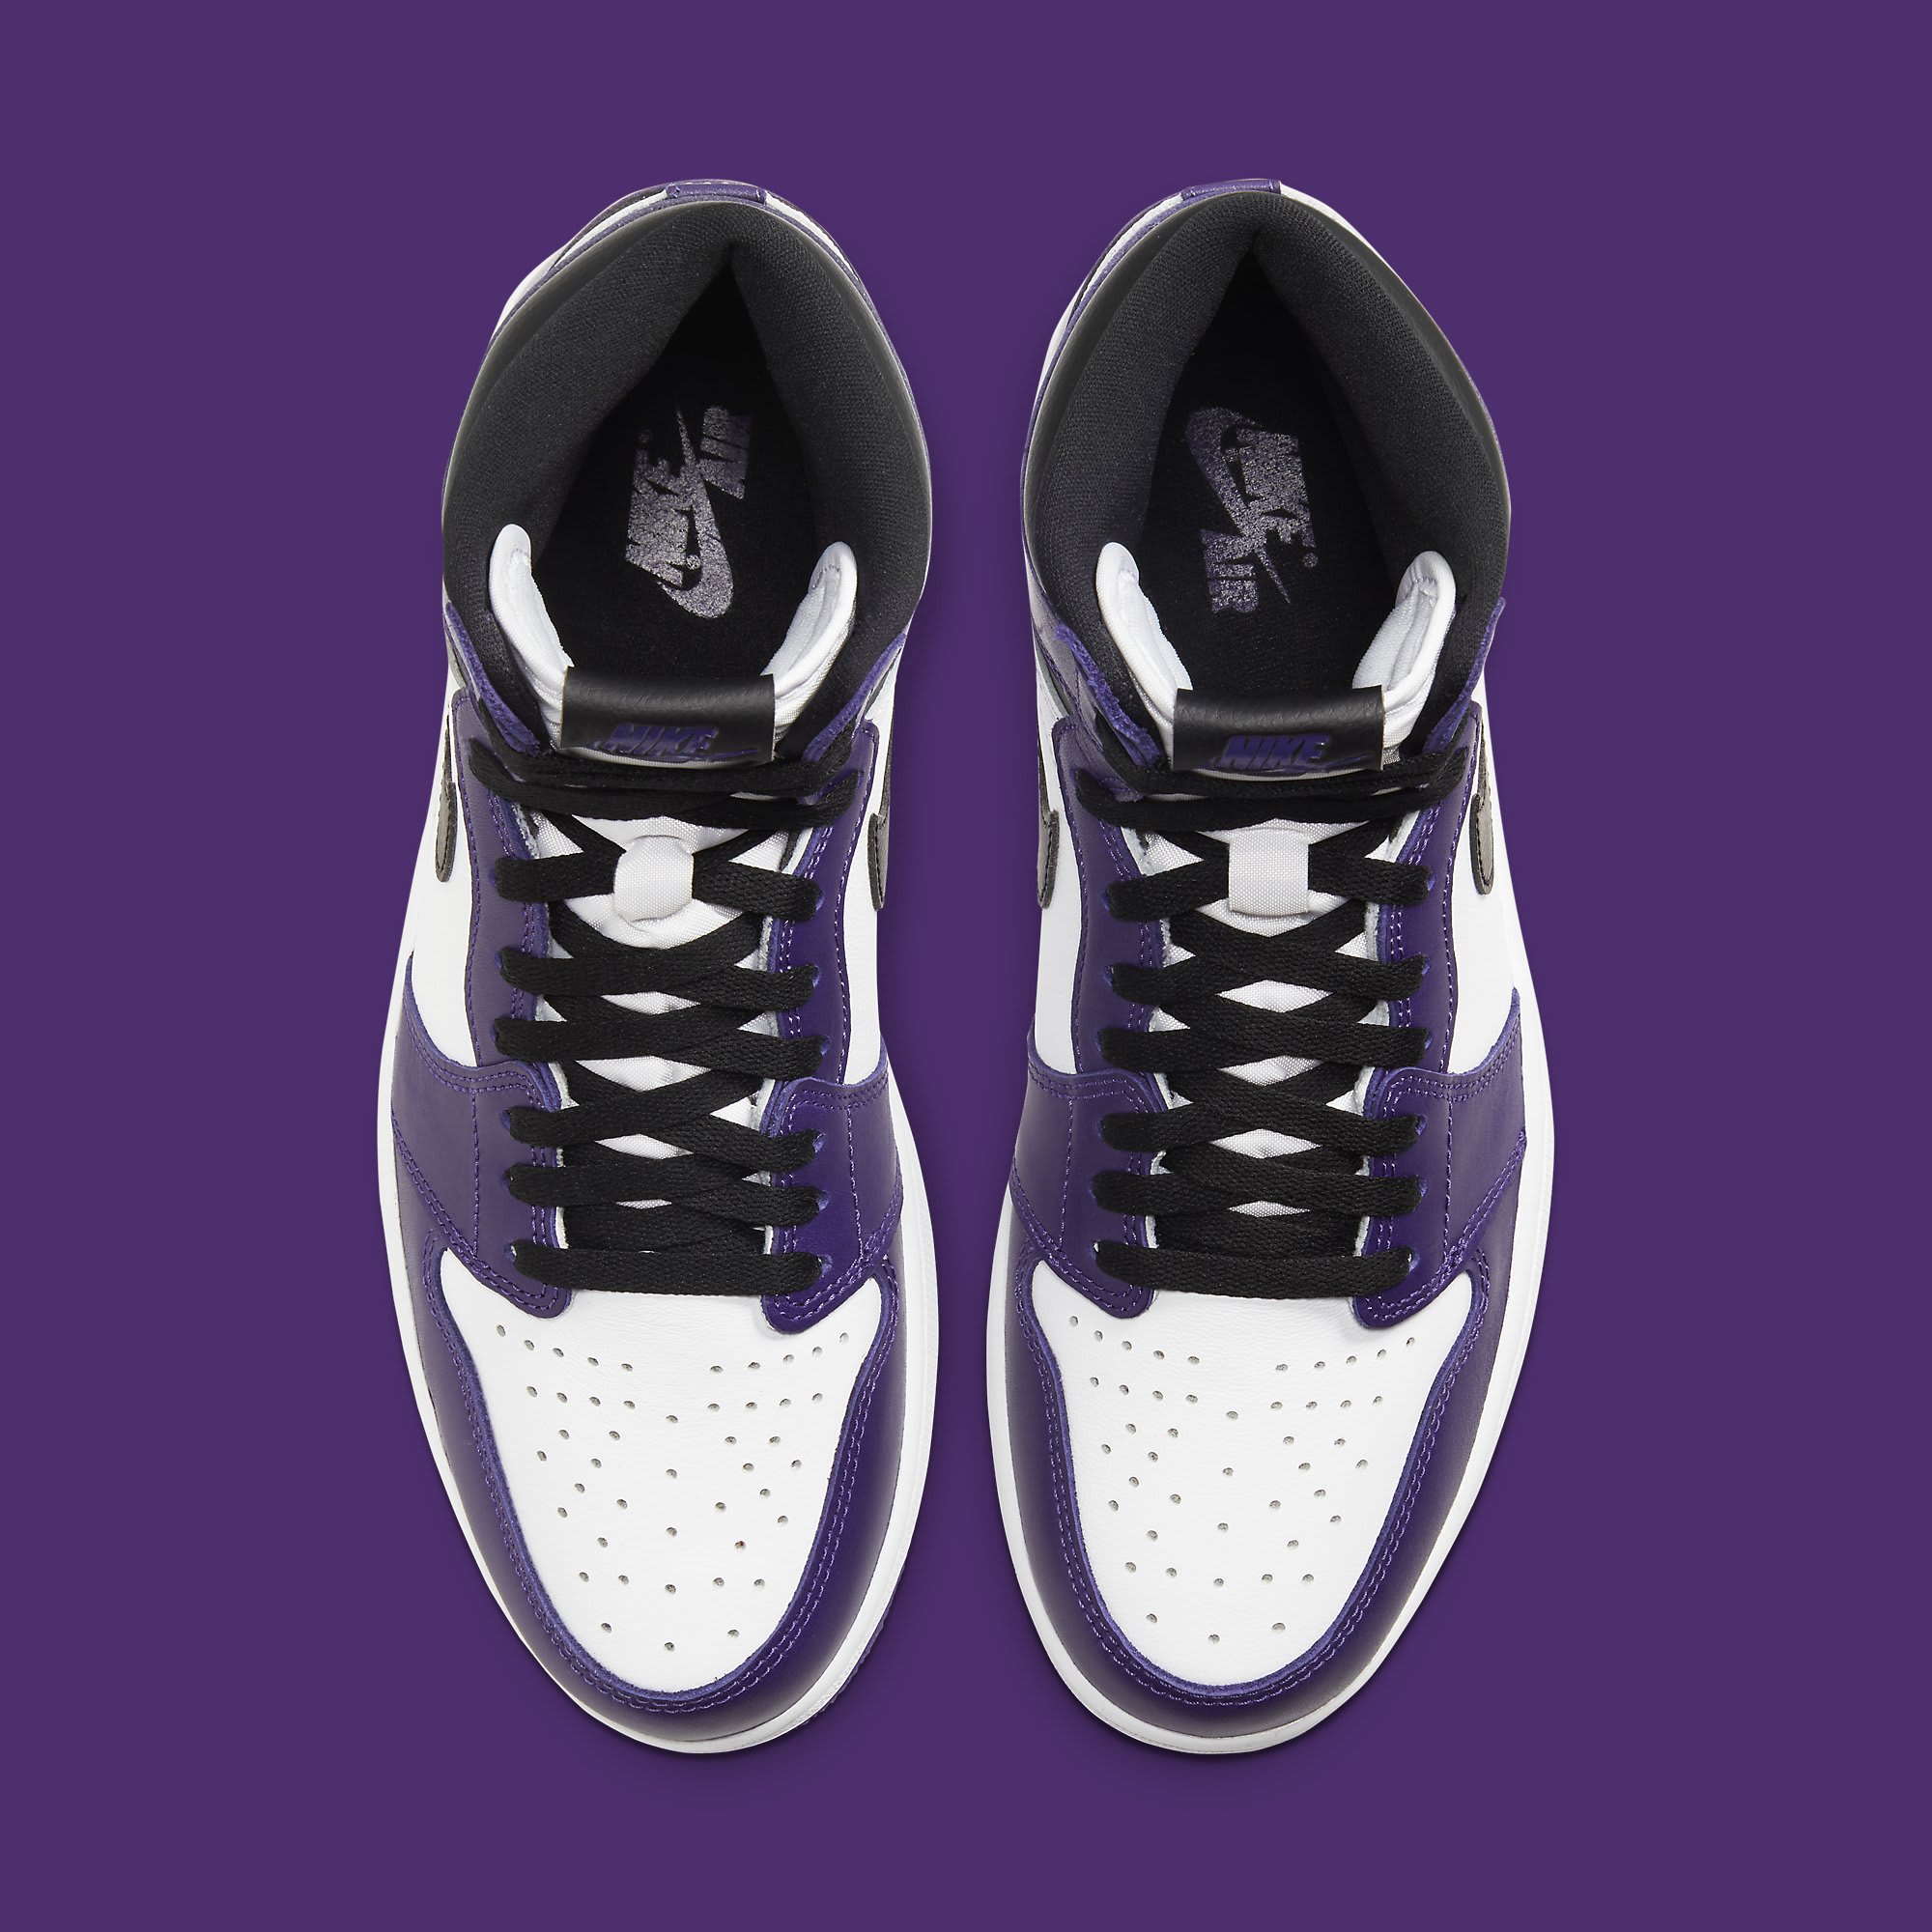 Air Jordan 1 High OG &quot;Court Purple&quot; Coming Soon: Official Images